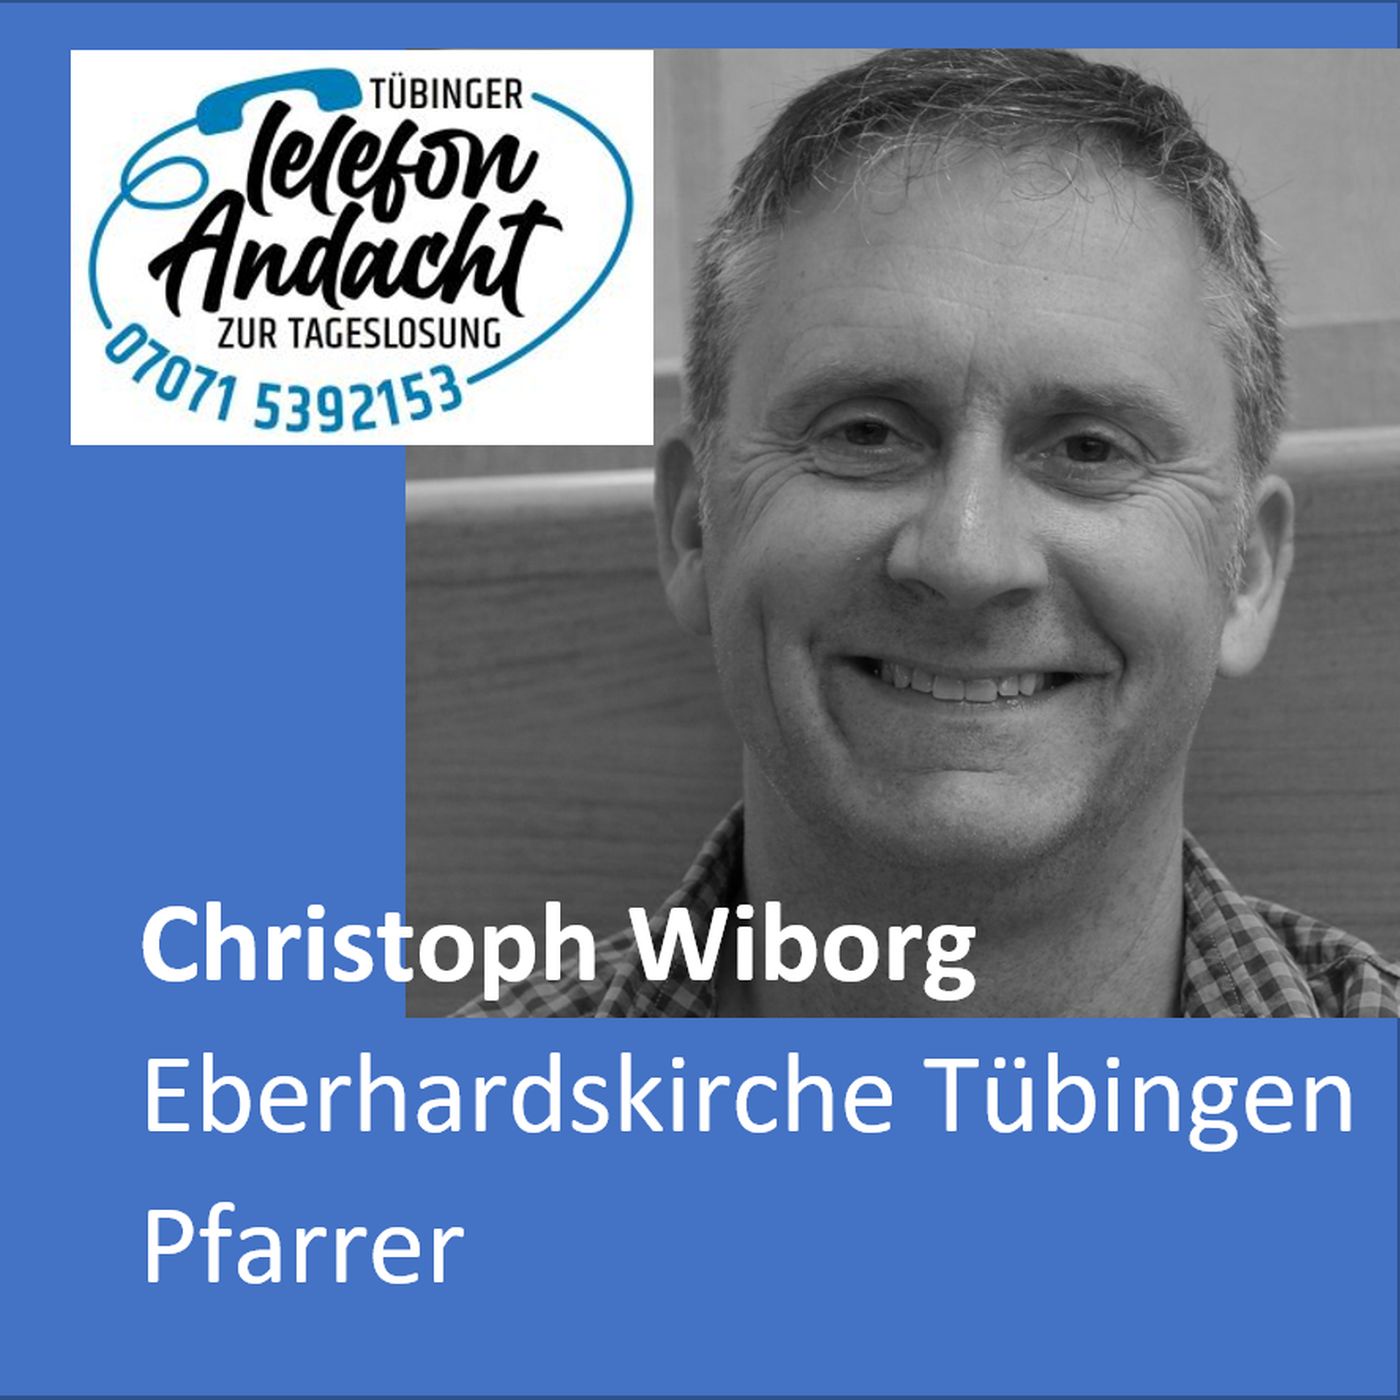 24 04 20 Christoph Wiborg